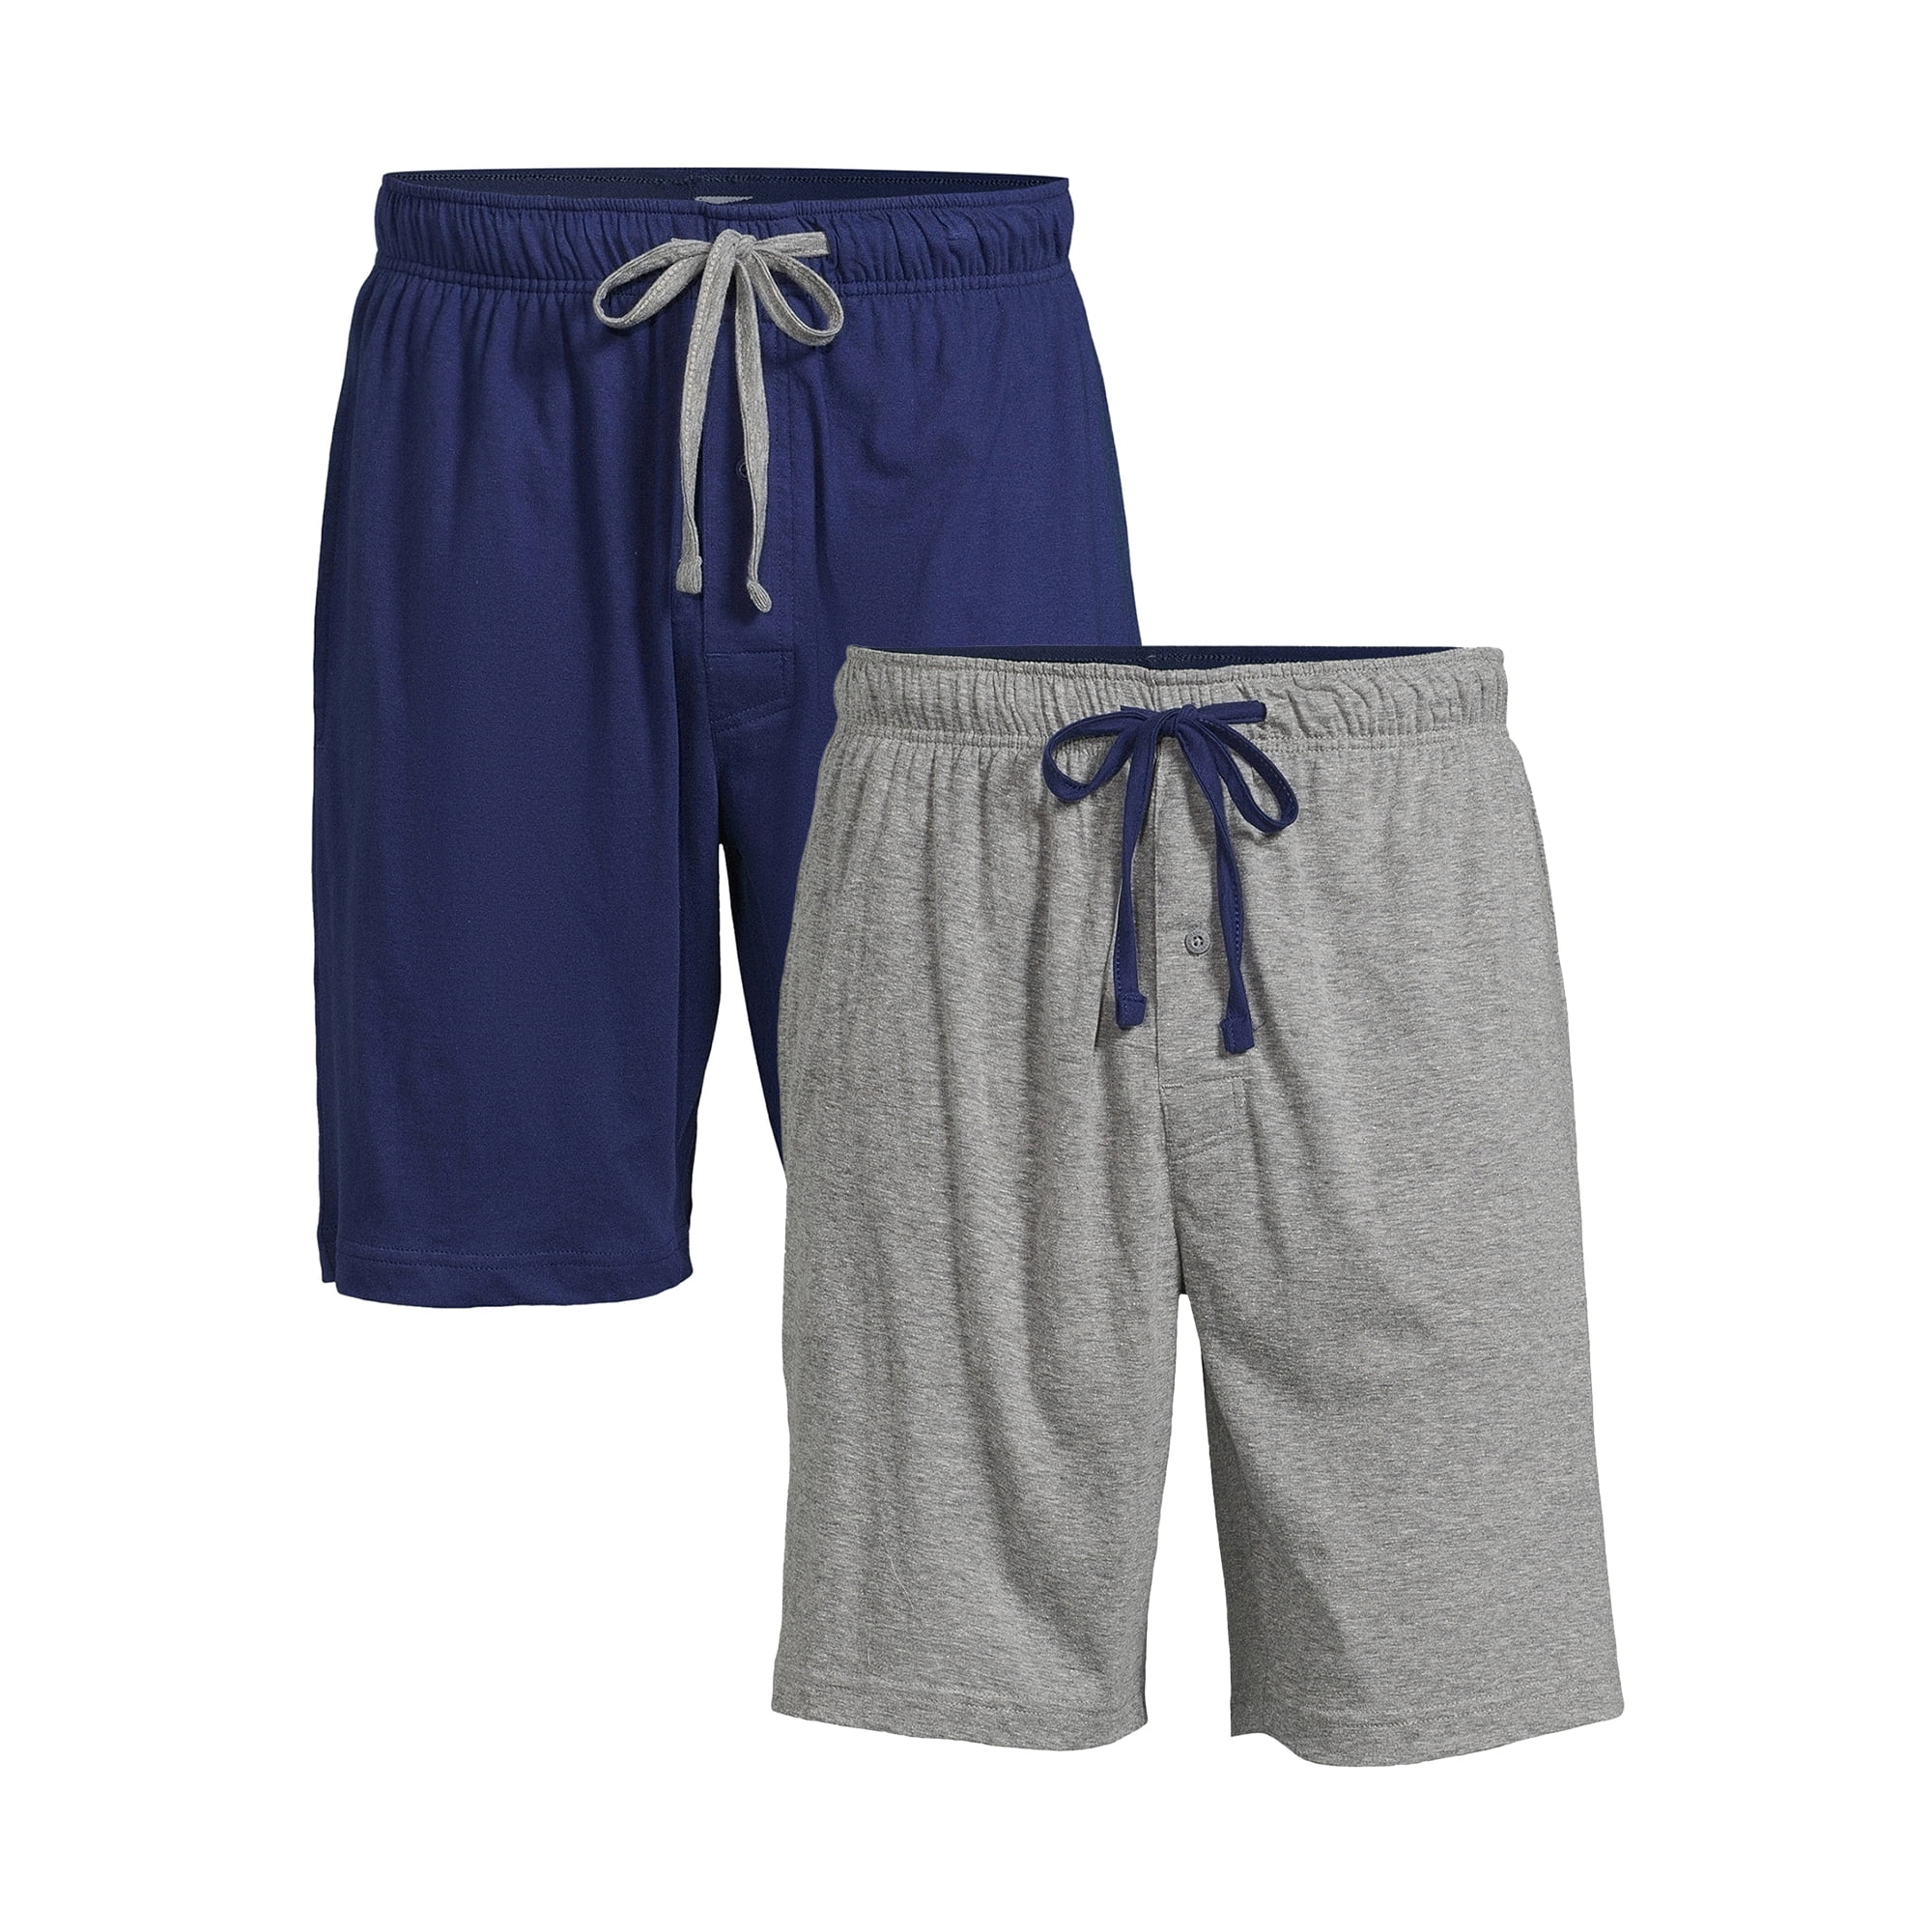 2-Pack Hanes Men's Xtemp Knit Jam Pajama Shorts (Various) $7.75 ($3.88 Each) + Free Shipping w/ Walmart+ or on $35+